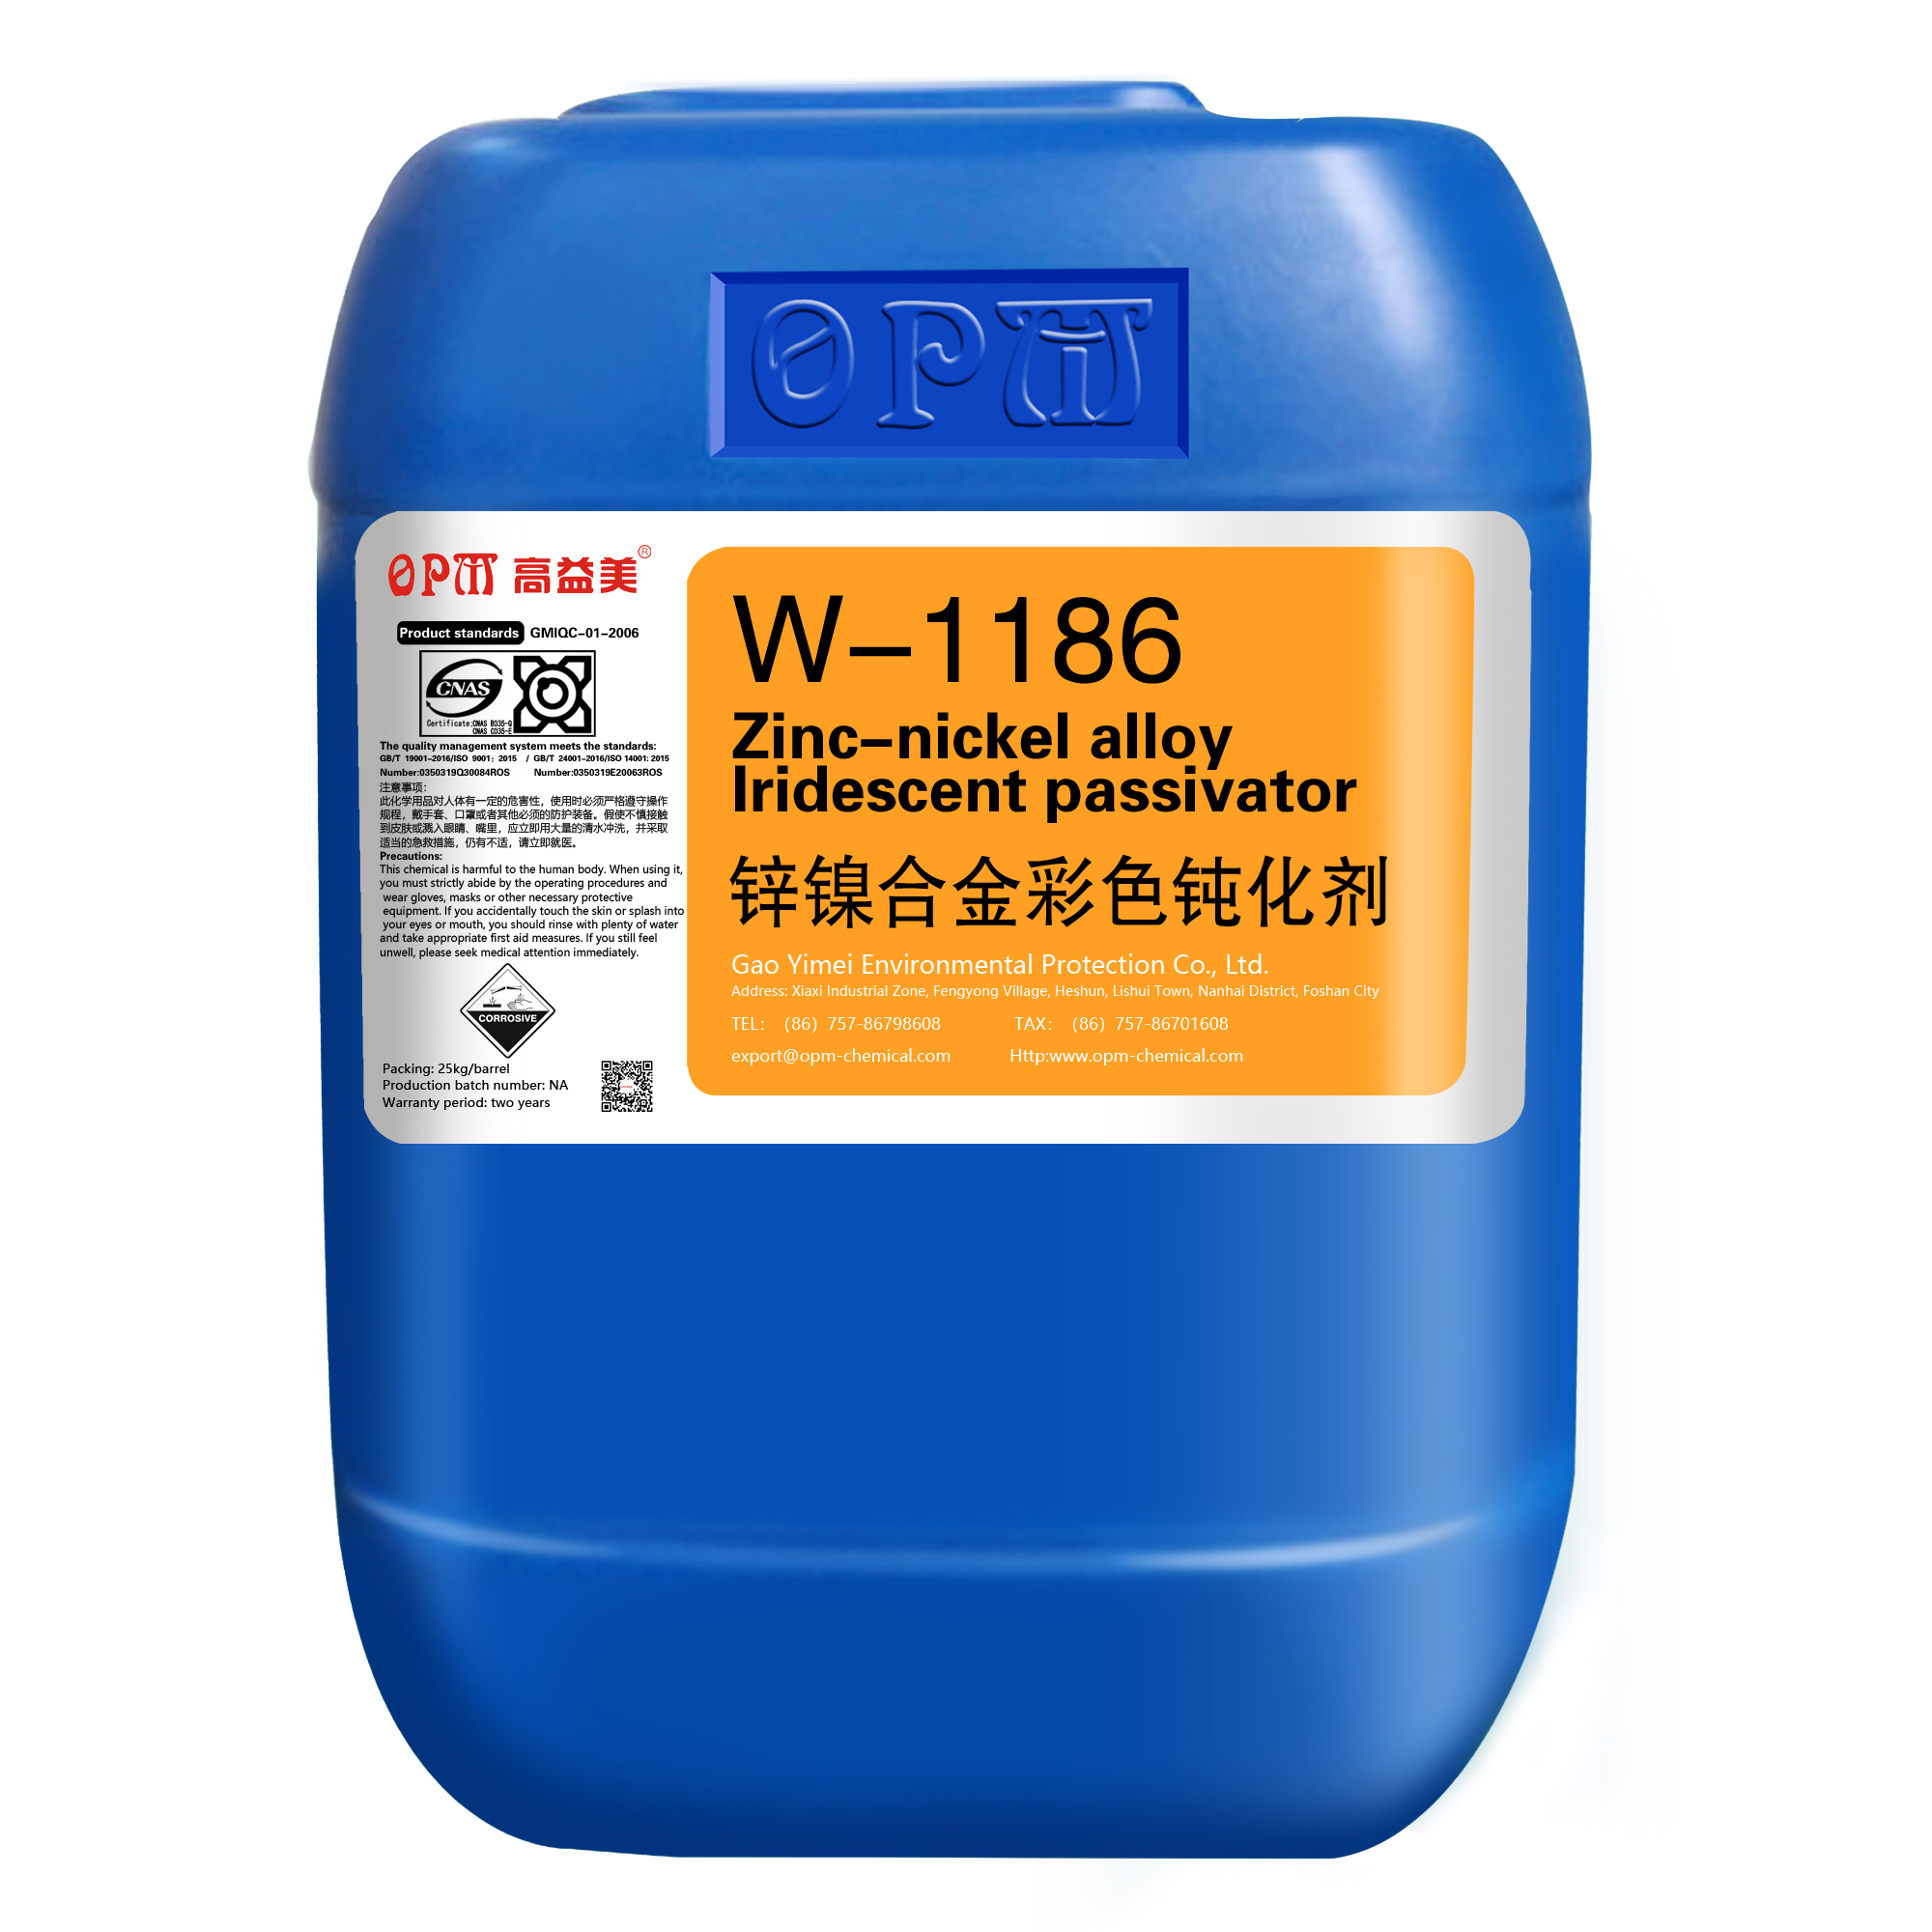 W-1186Blue passivator for Zinc-nickel alloy